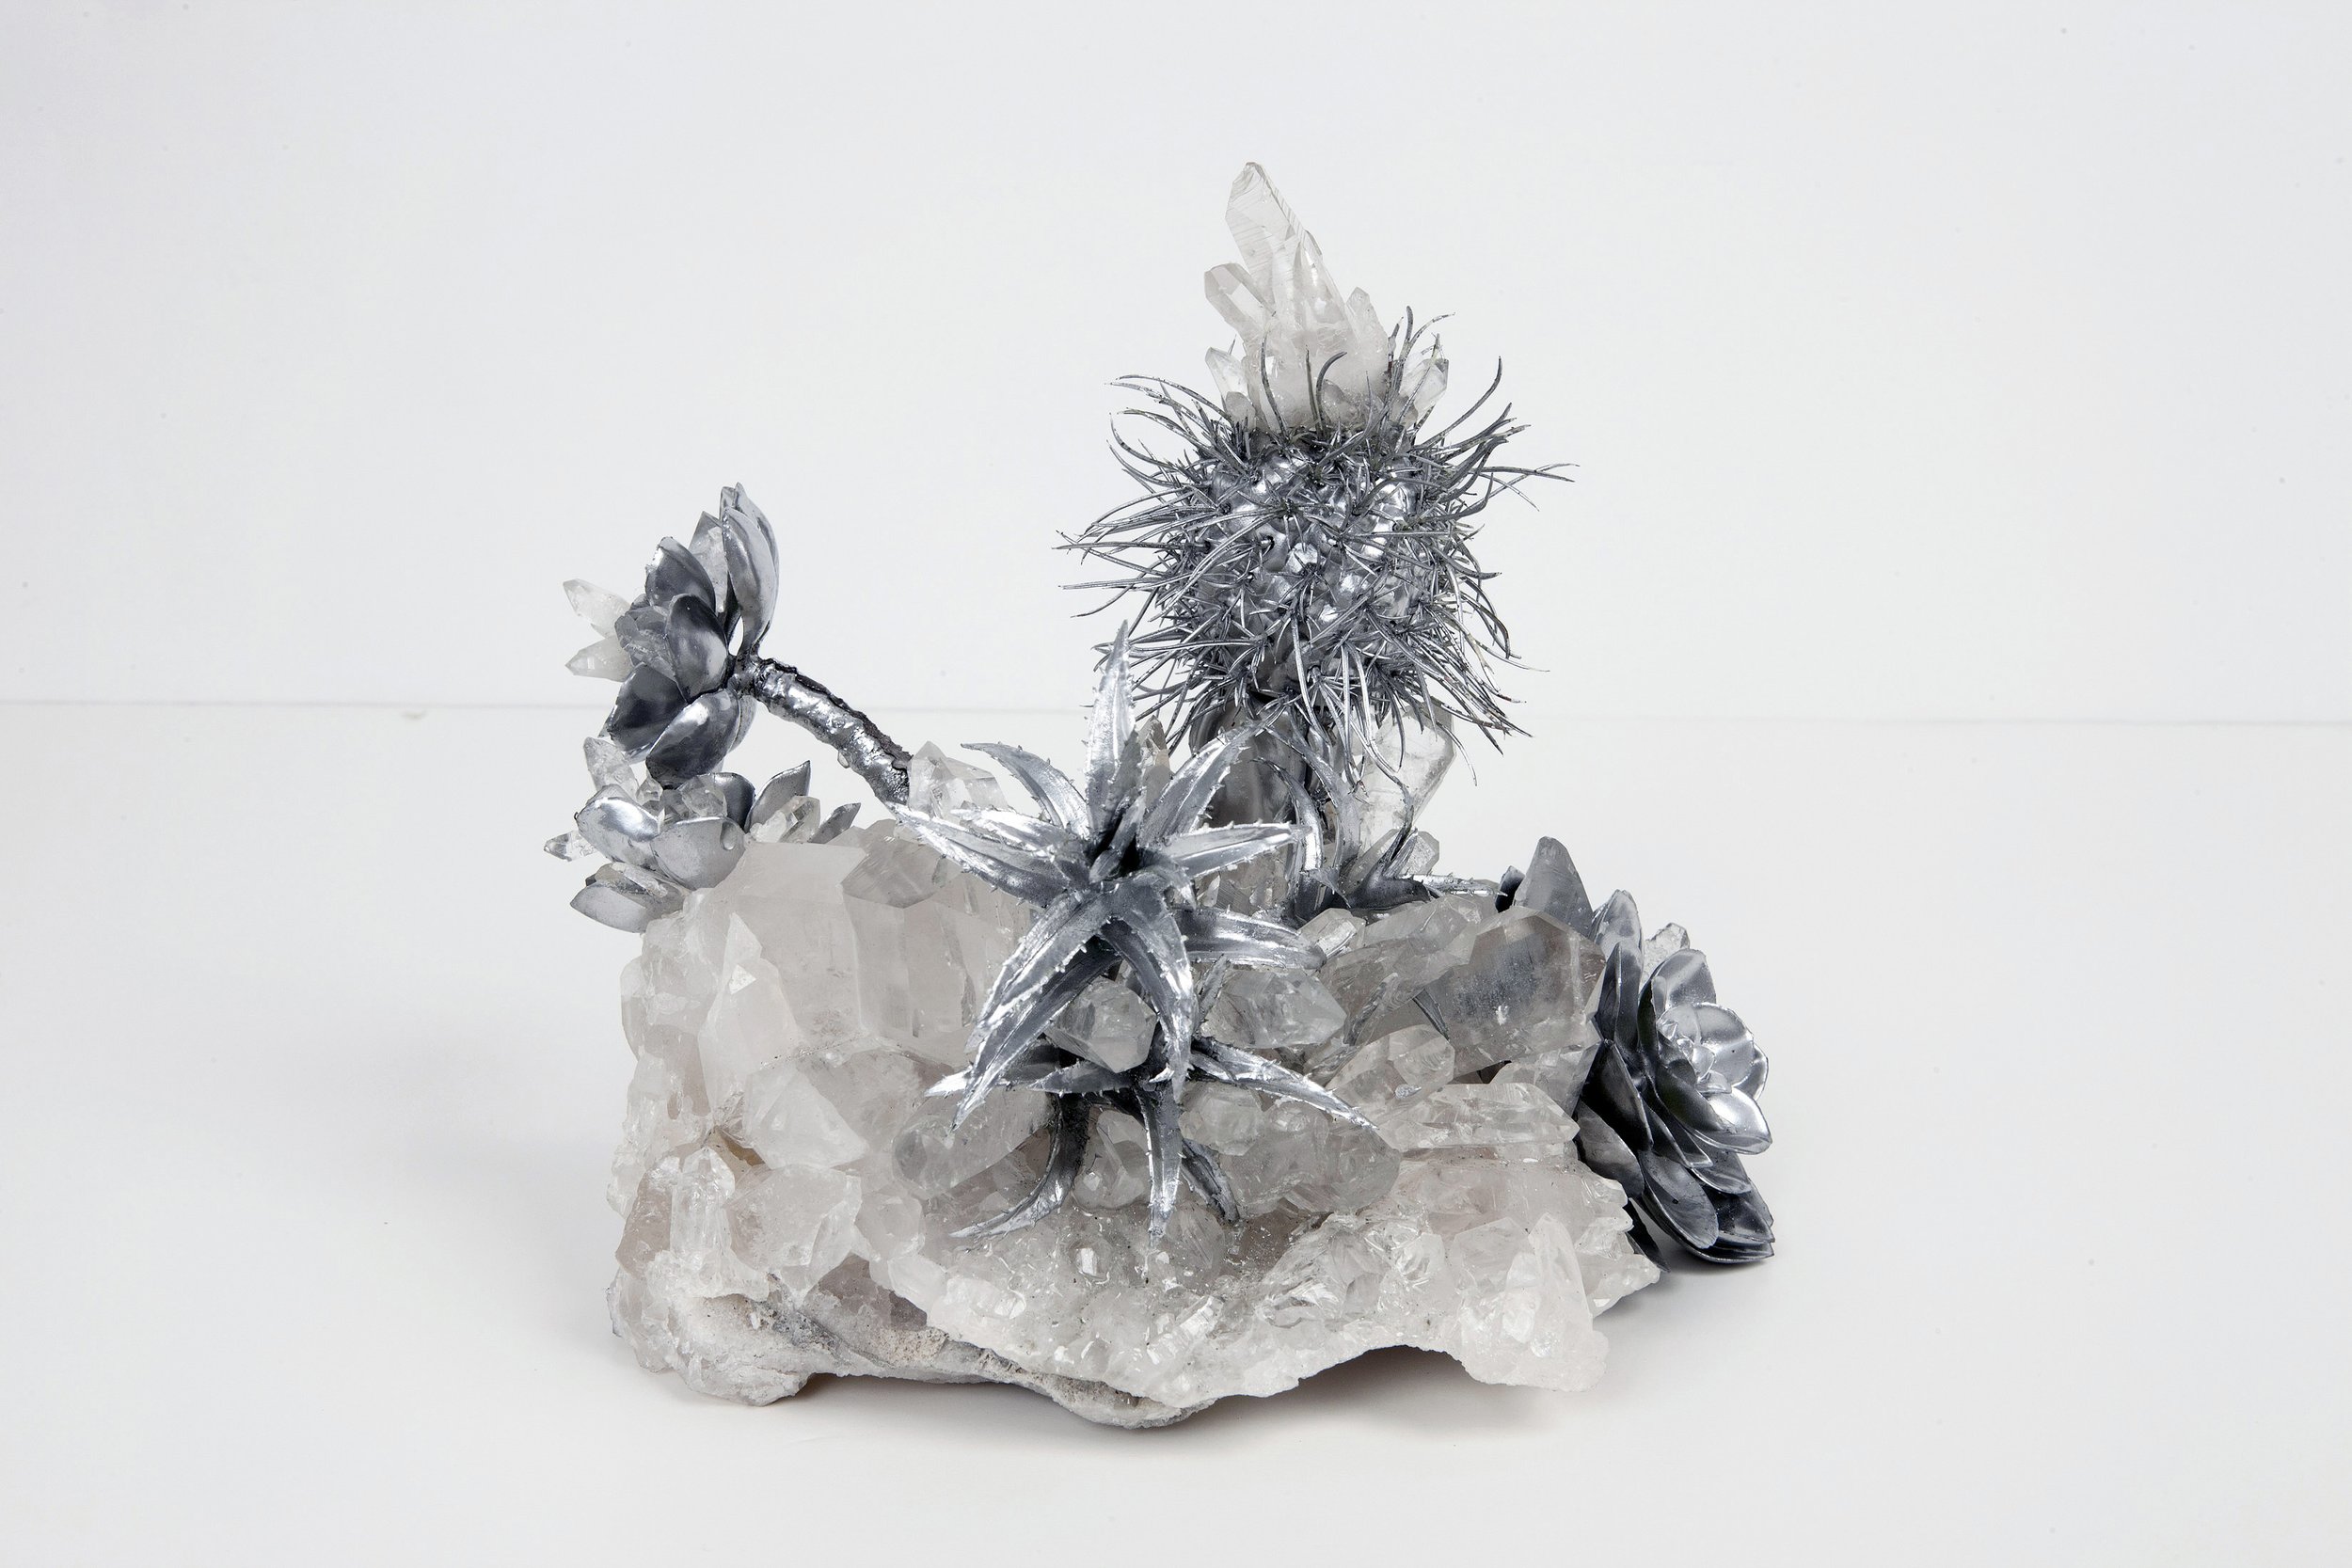 Untitled (Cactus Crystal) #5